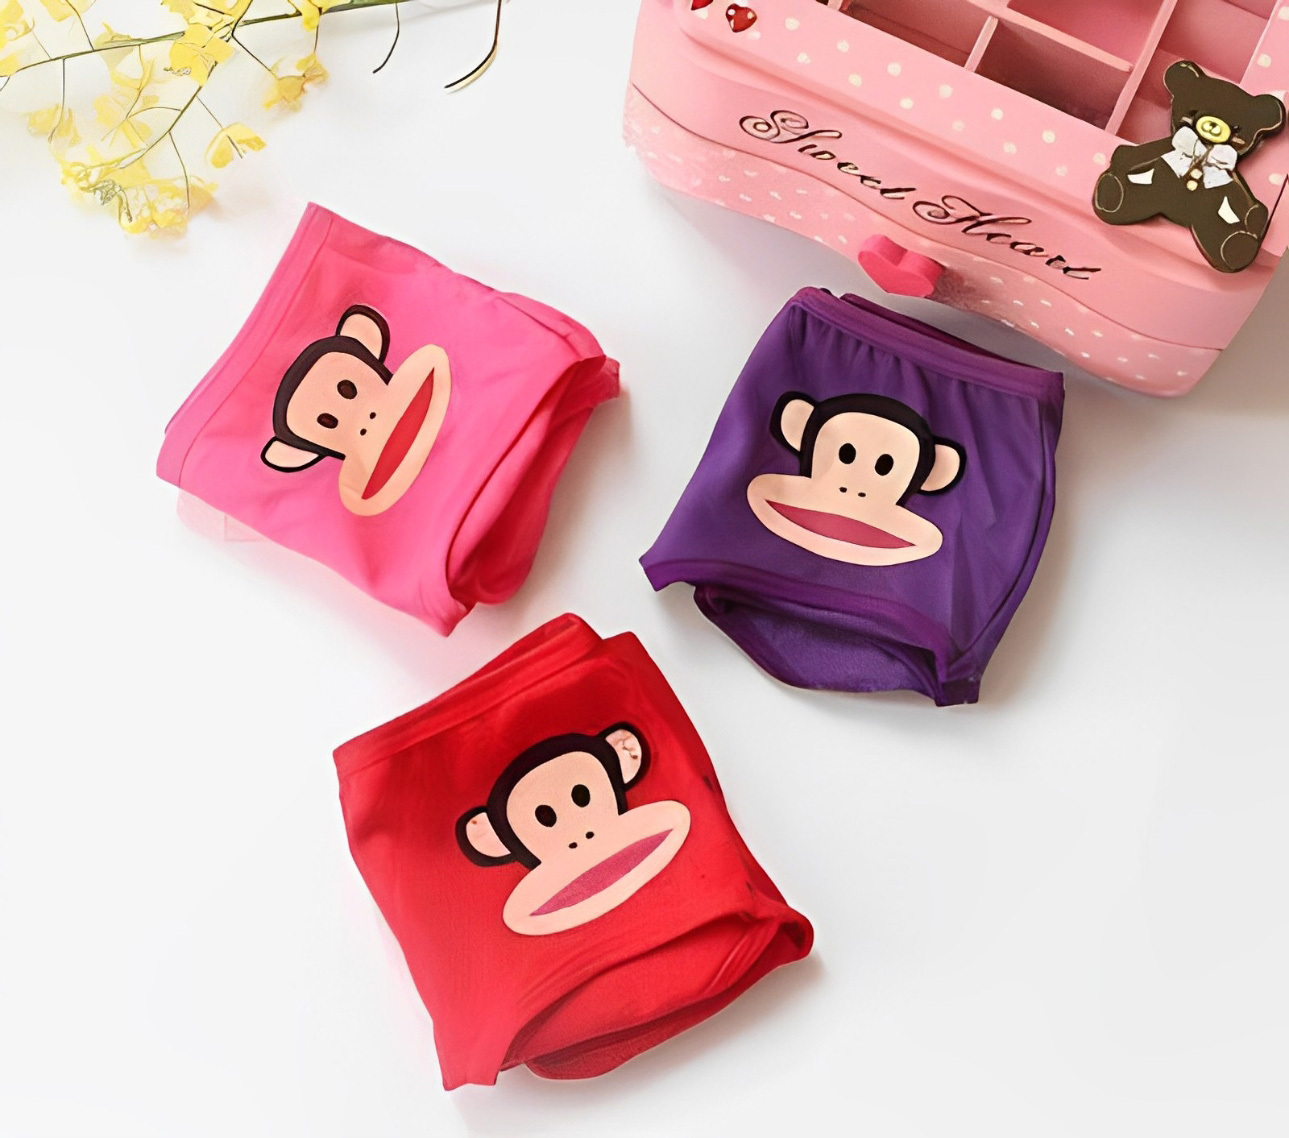 4 x Cute Monkey Print Cotton Briefs Underwear (Assorted Colours)